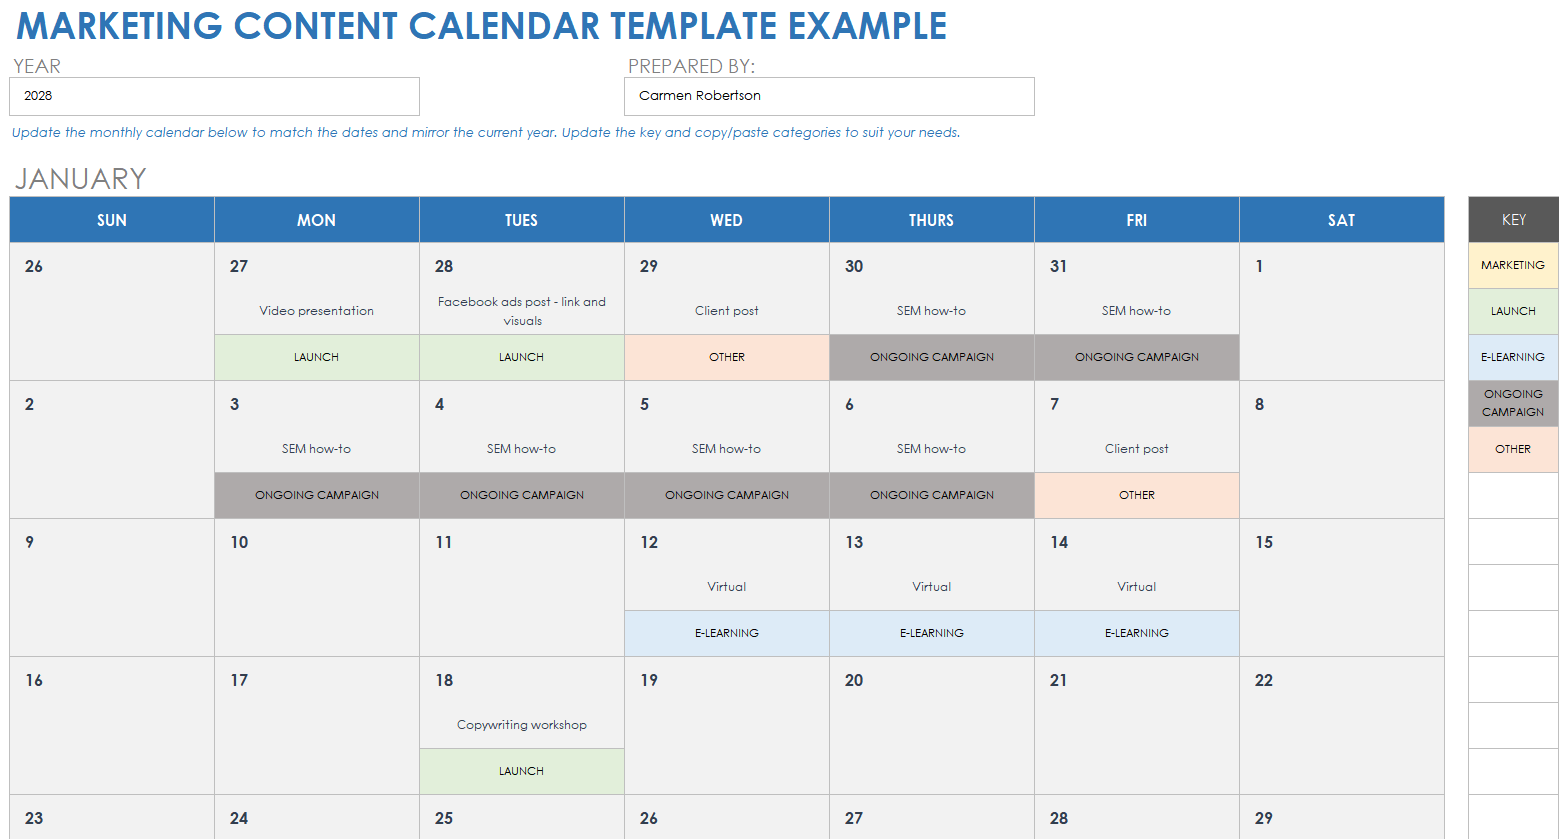 Marketing Content Calendar Example Template